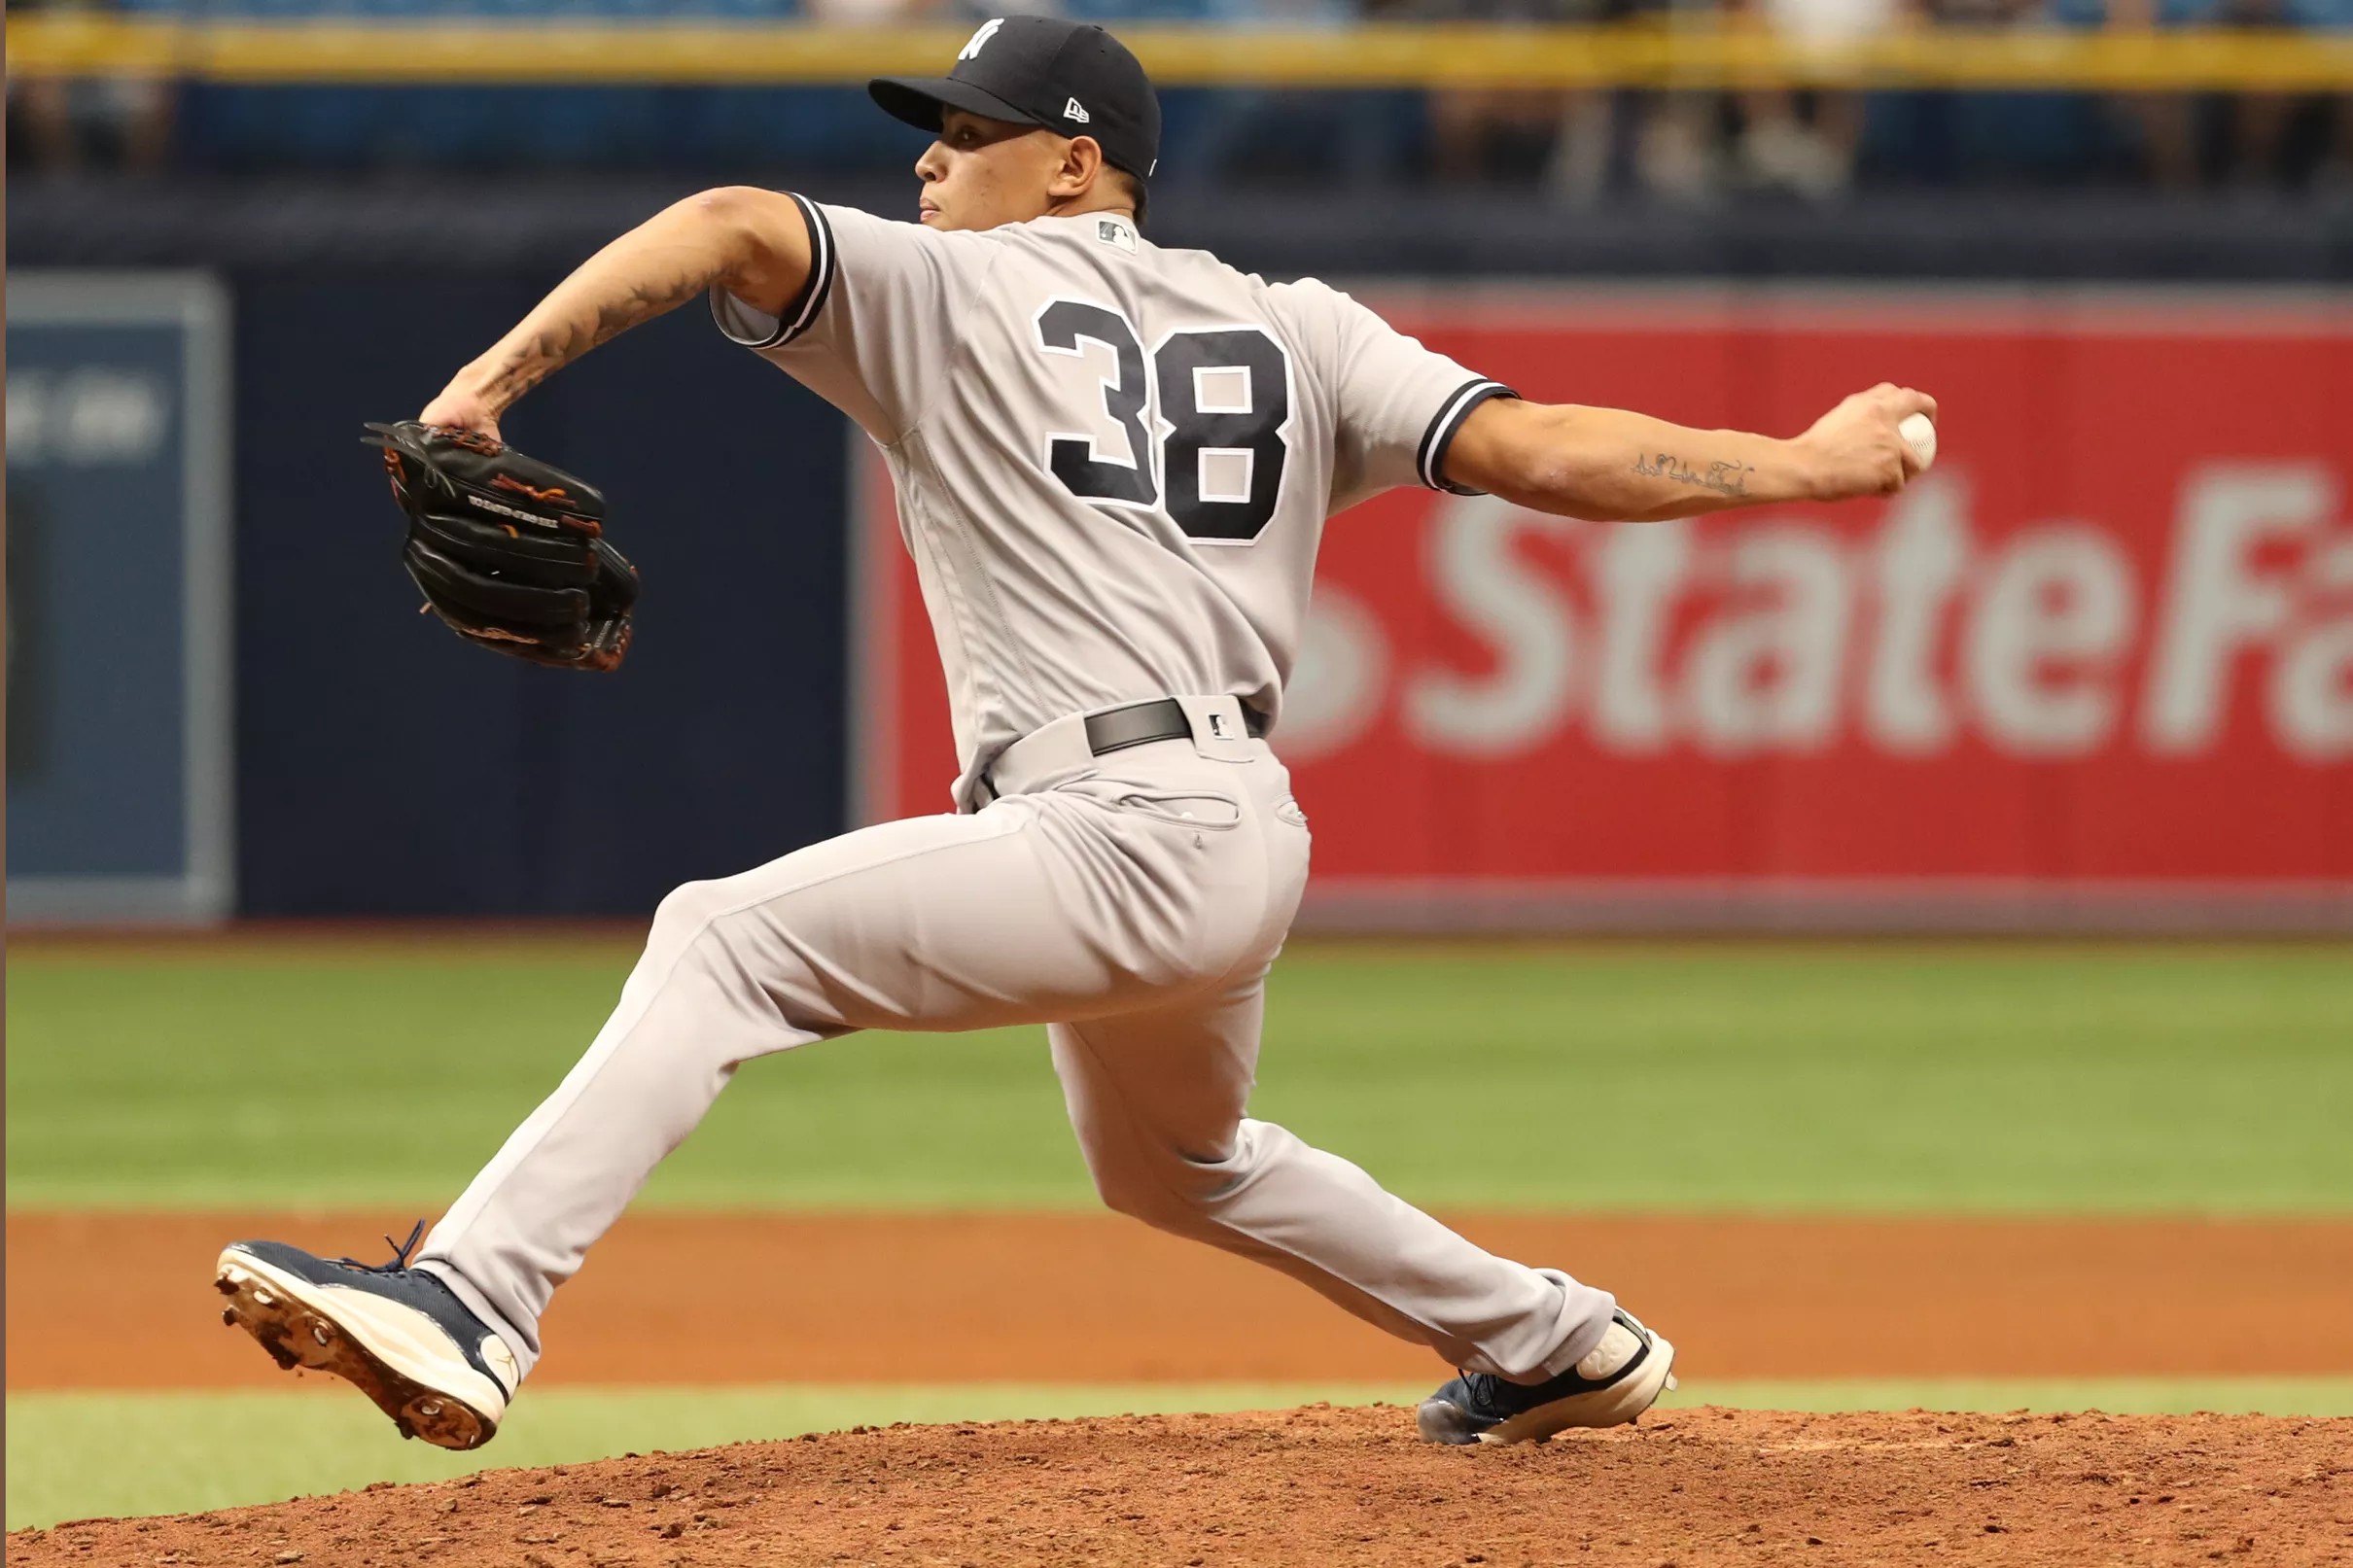 Surveying the Yankees’ starting pitching depth in 2019